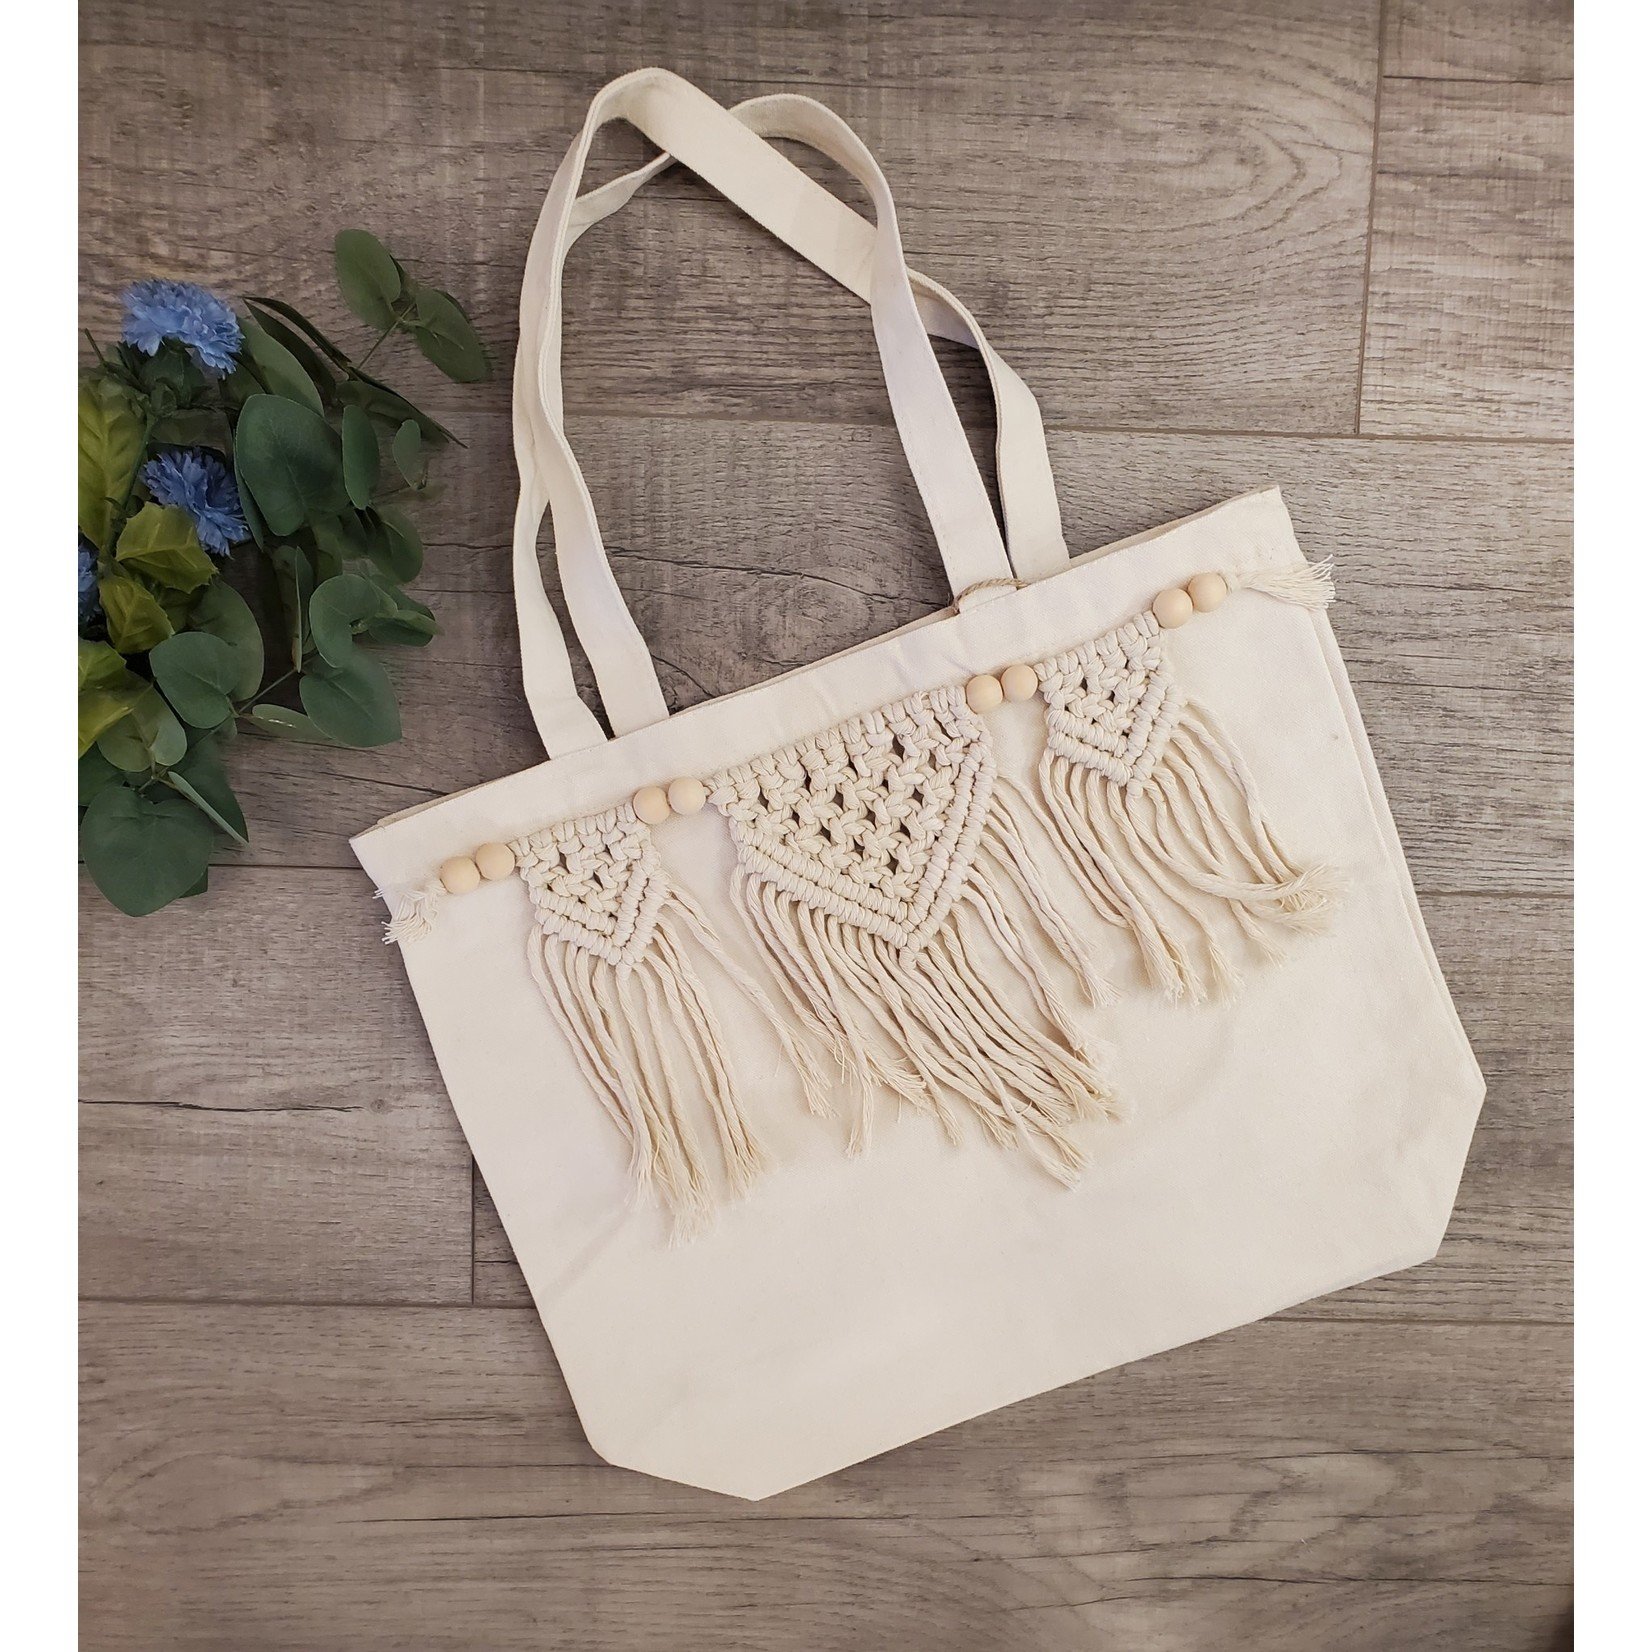 Make your own #macrame bag, purse... - Macrame for Beginners | Facebook